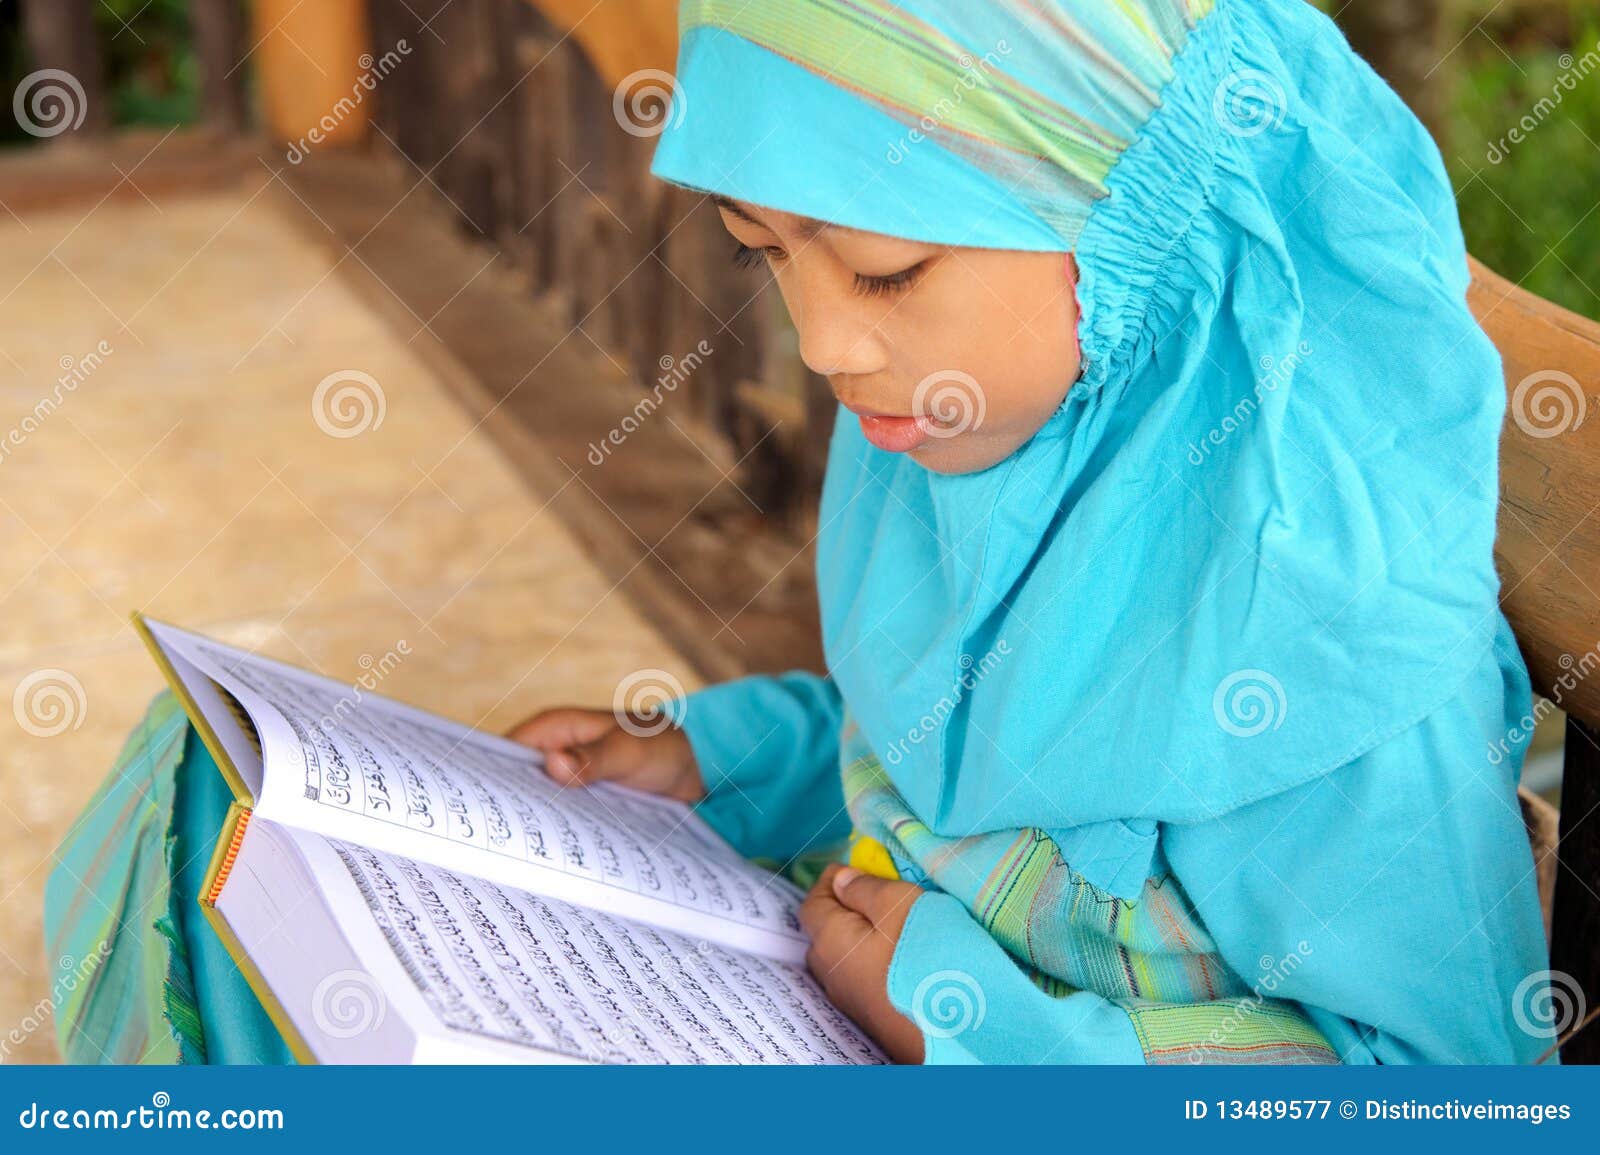 muslim child reading koran, indonesia